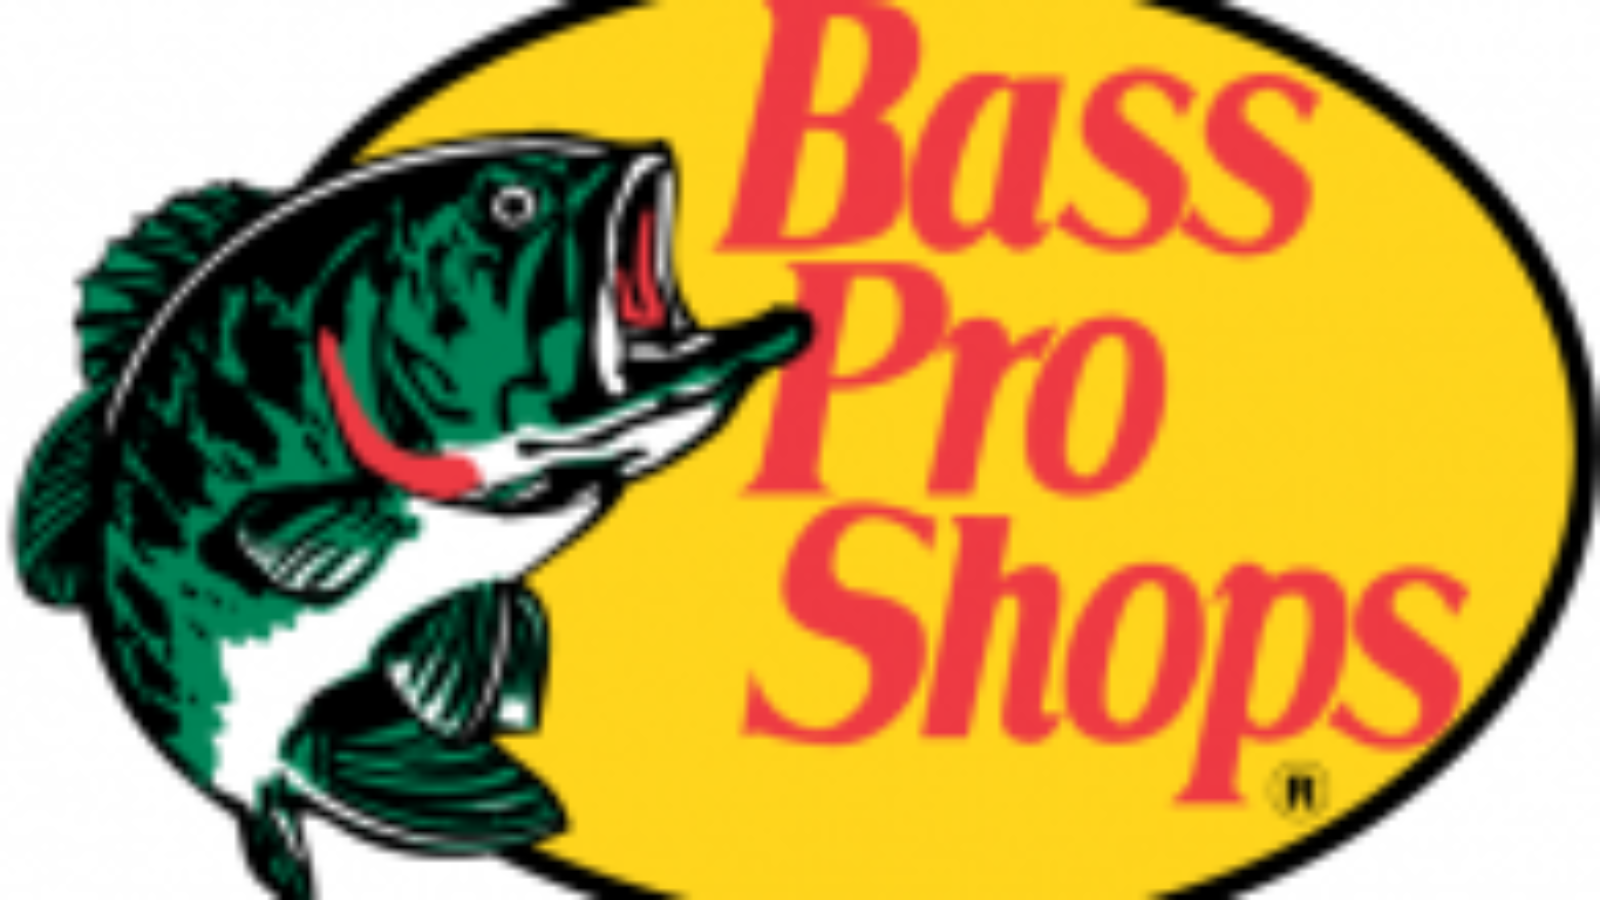 bass-pro-shop-logo